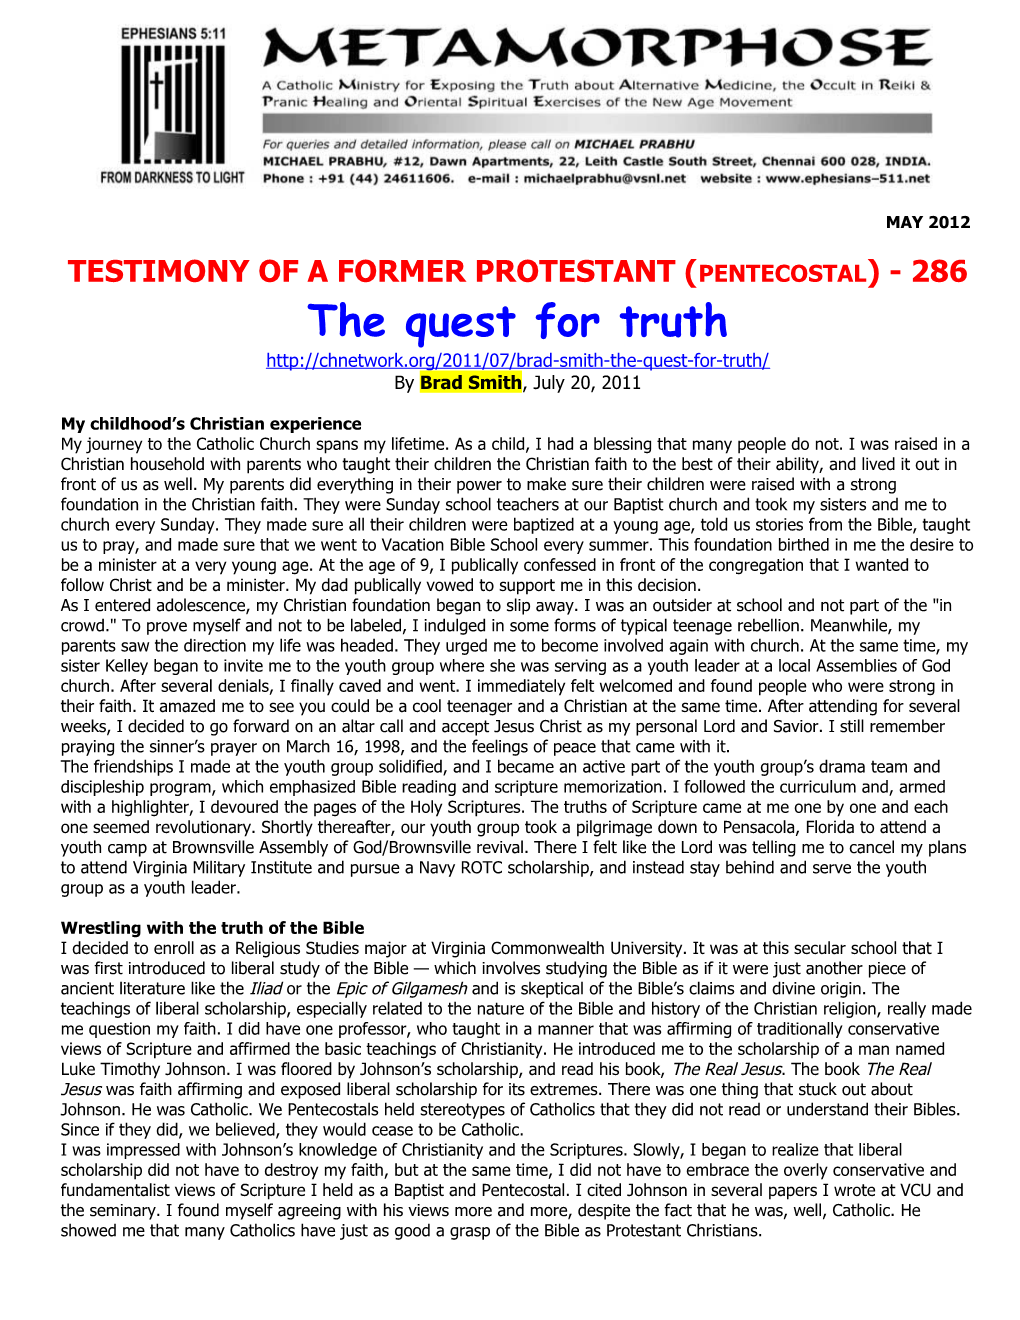 Testimony of a Former Protestant (Pentecostal) - 286